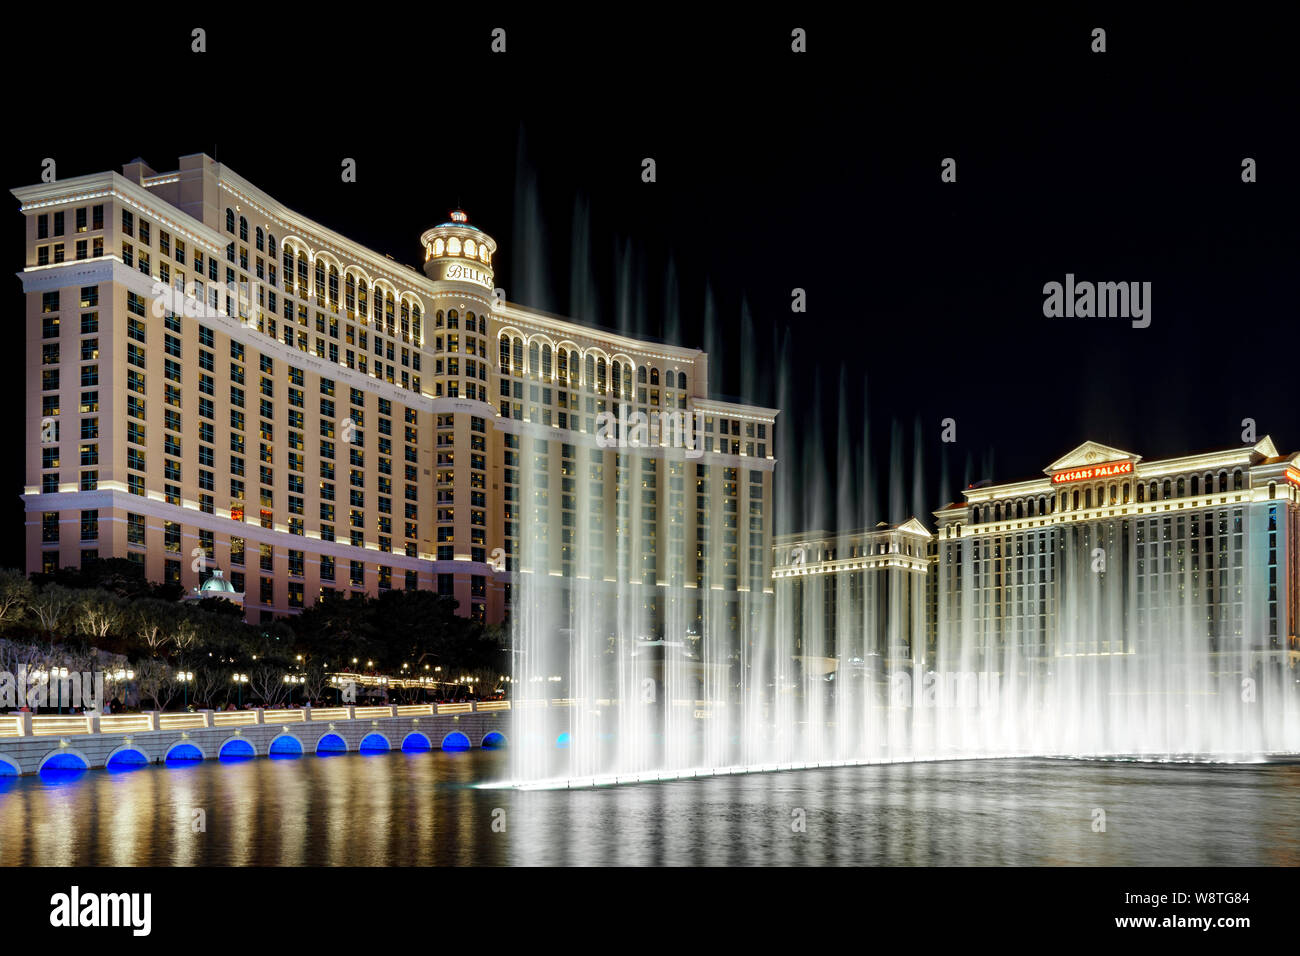 6,481 Bellagio Las Vegas Images, Stock Photos, 3D objects